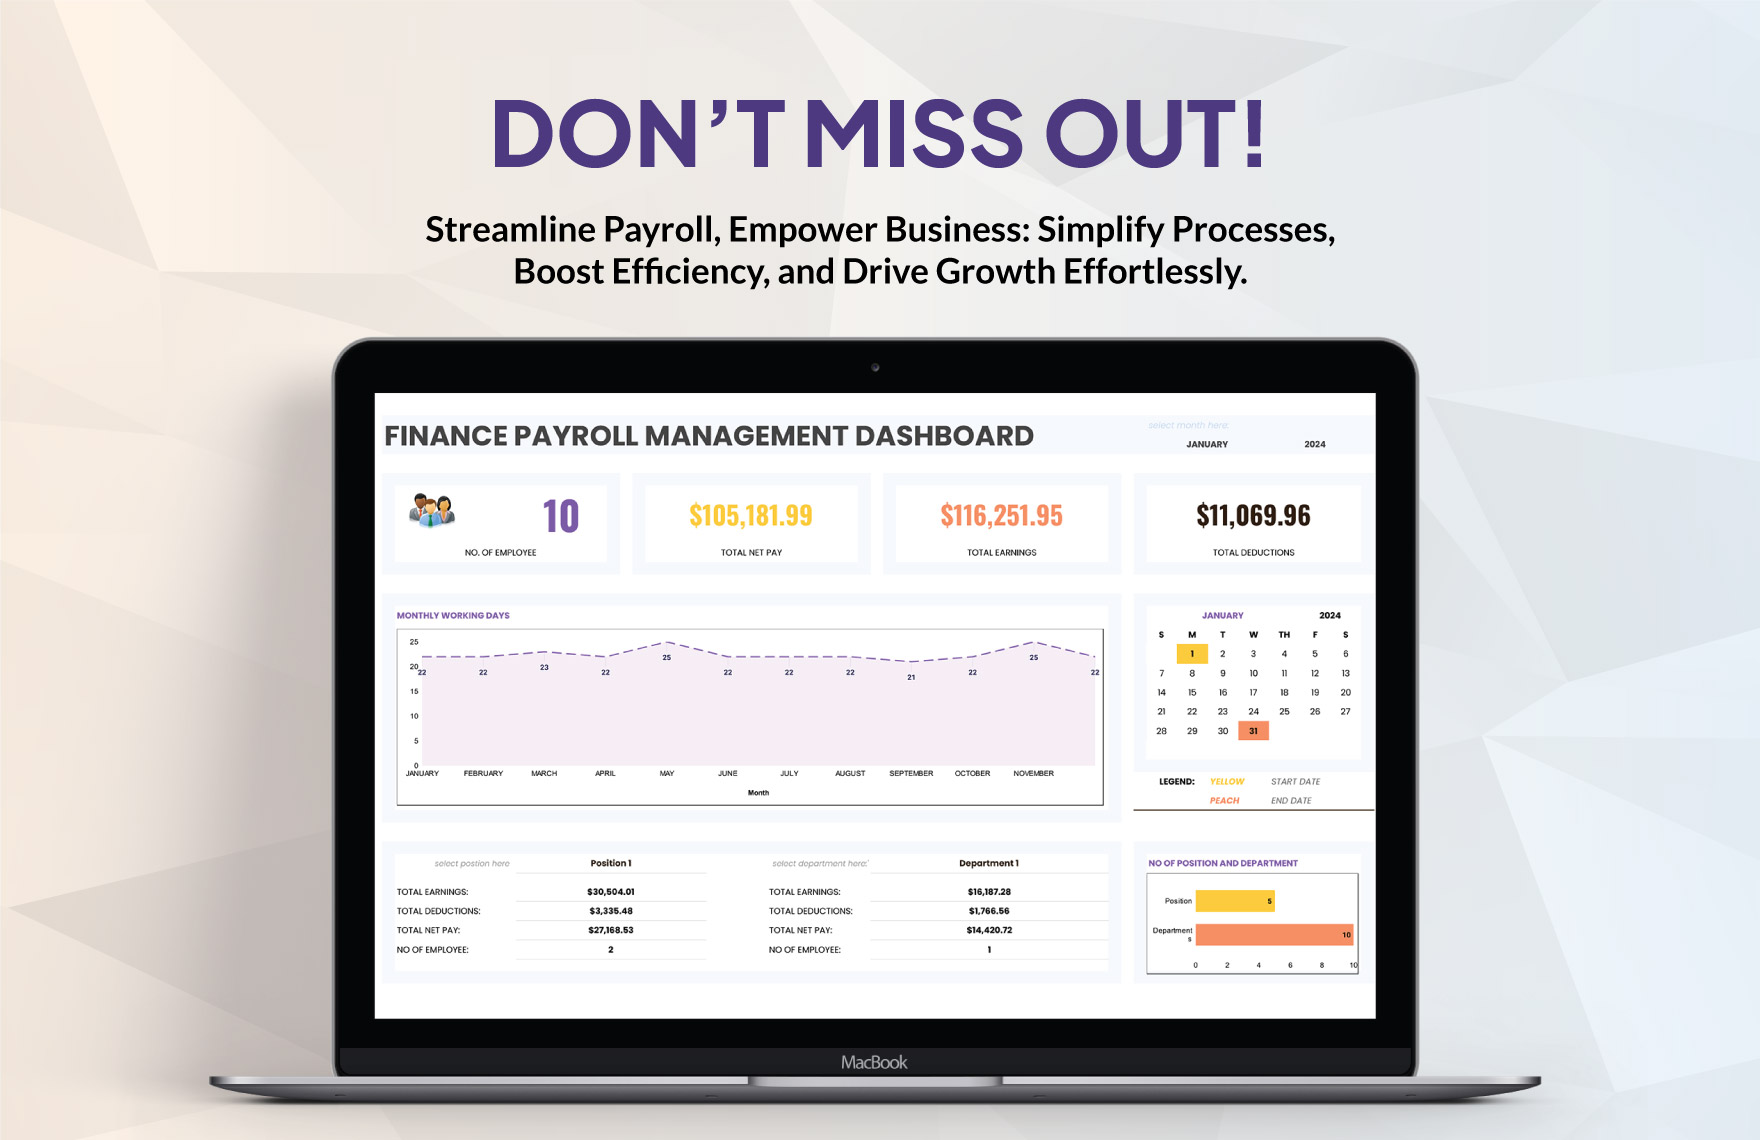 Finance Payroll Management Dashboard Template